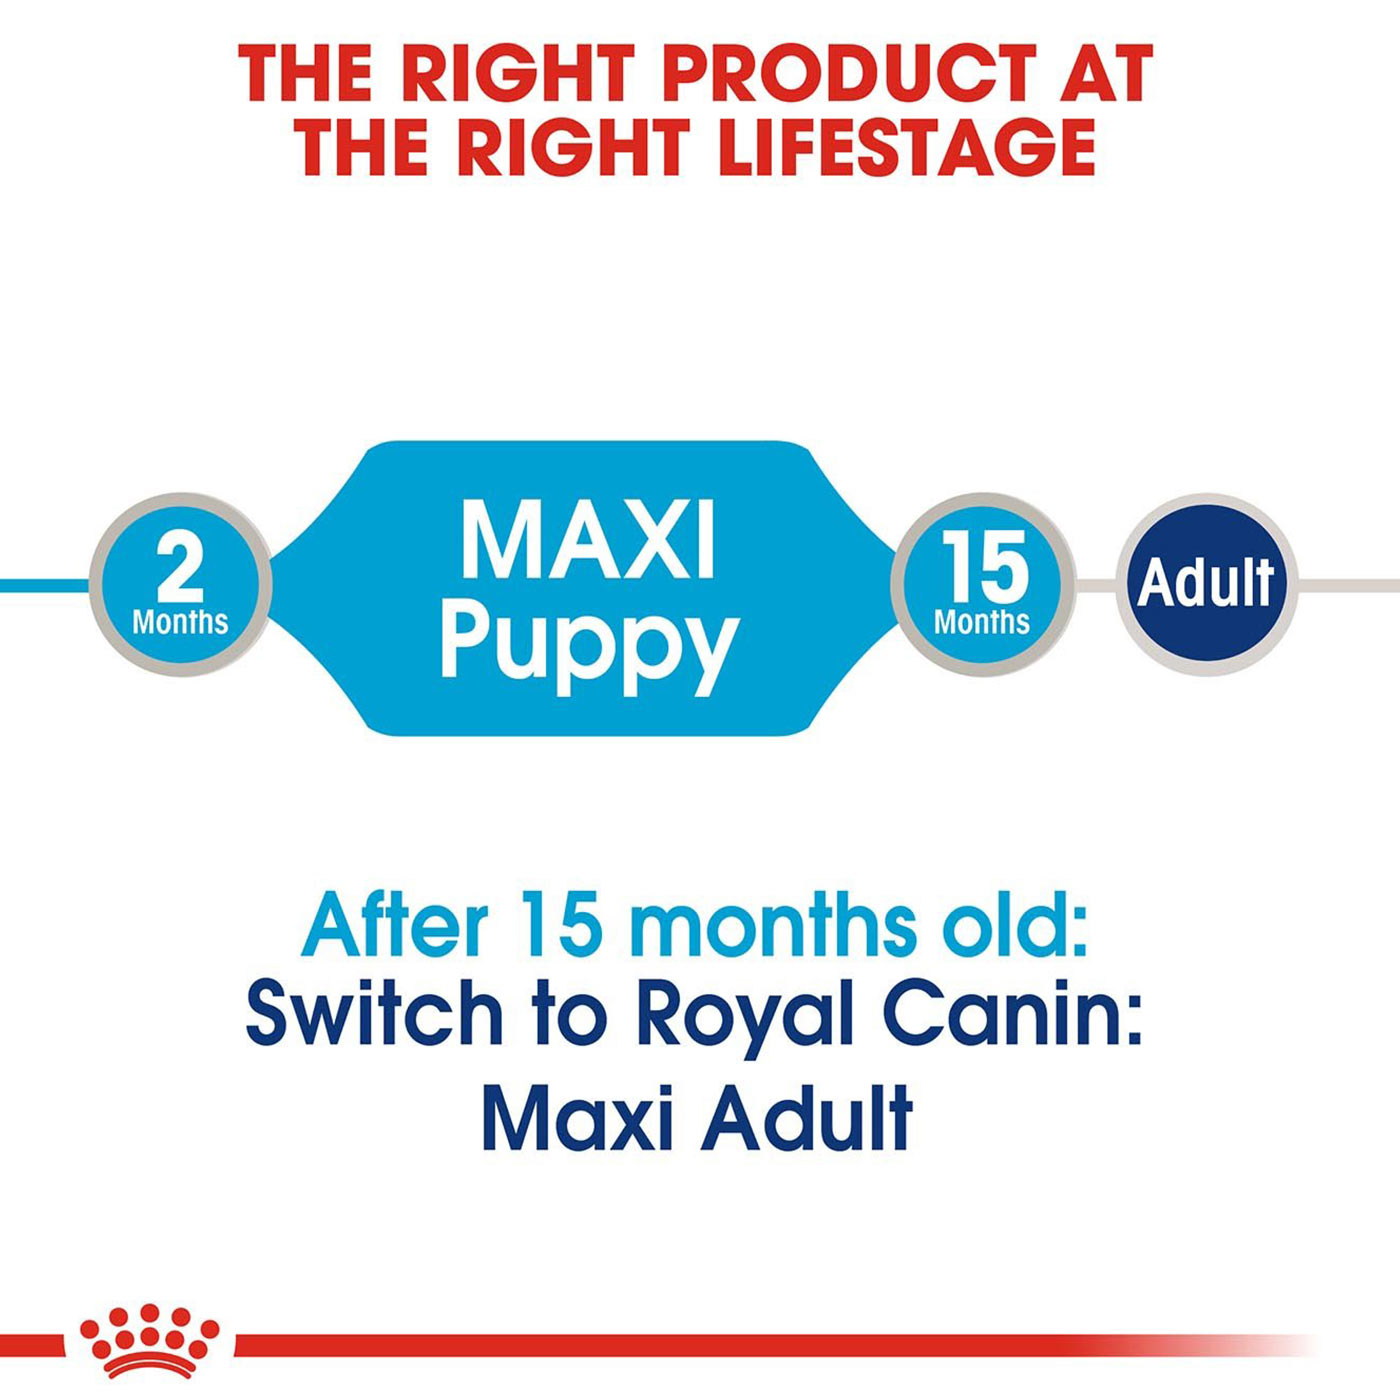 Royal Canin Puppy Maxi Breed Wet Dog Food